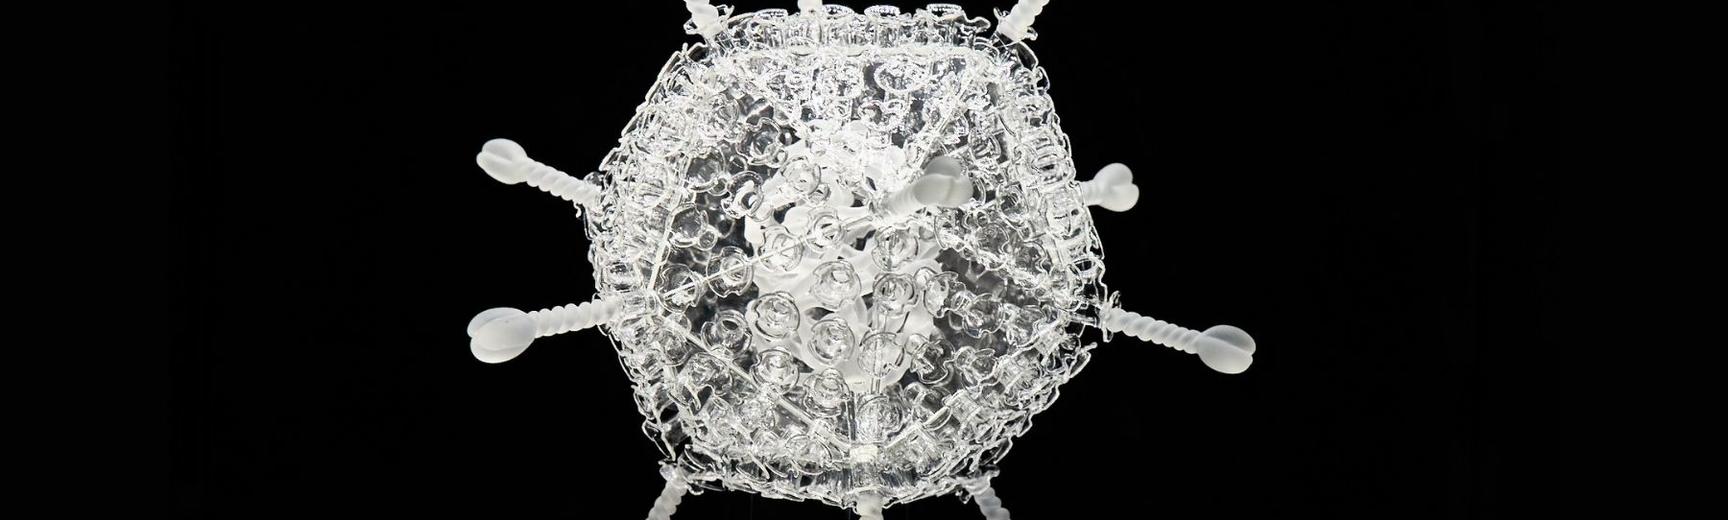 Luke Jerram COVID-19 vaccine glass sculpture (single nanoparticle)